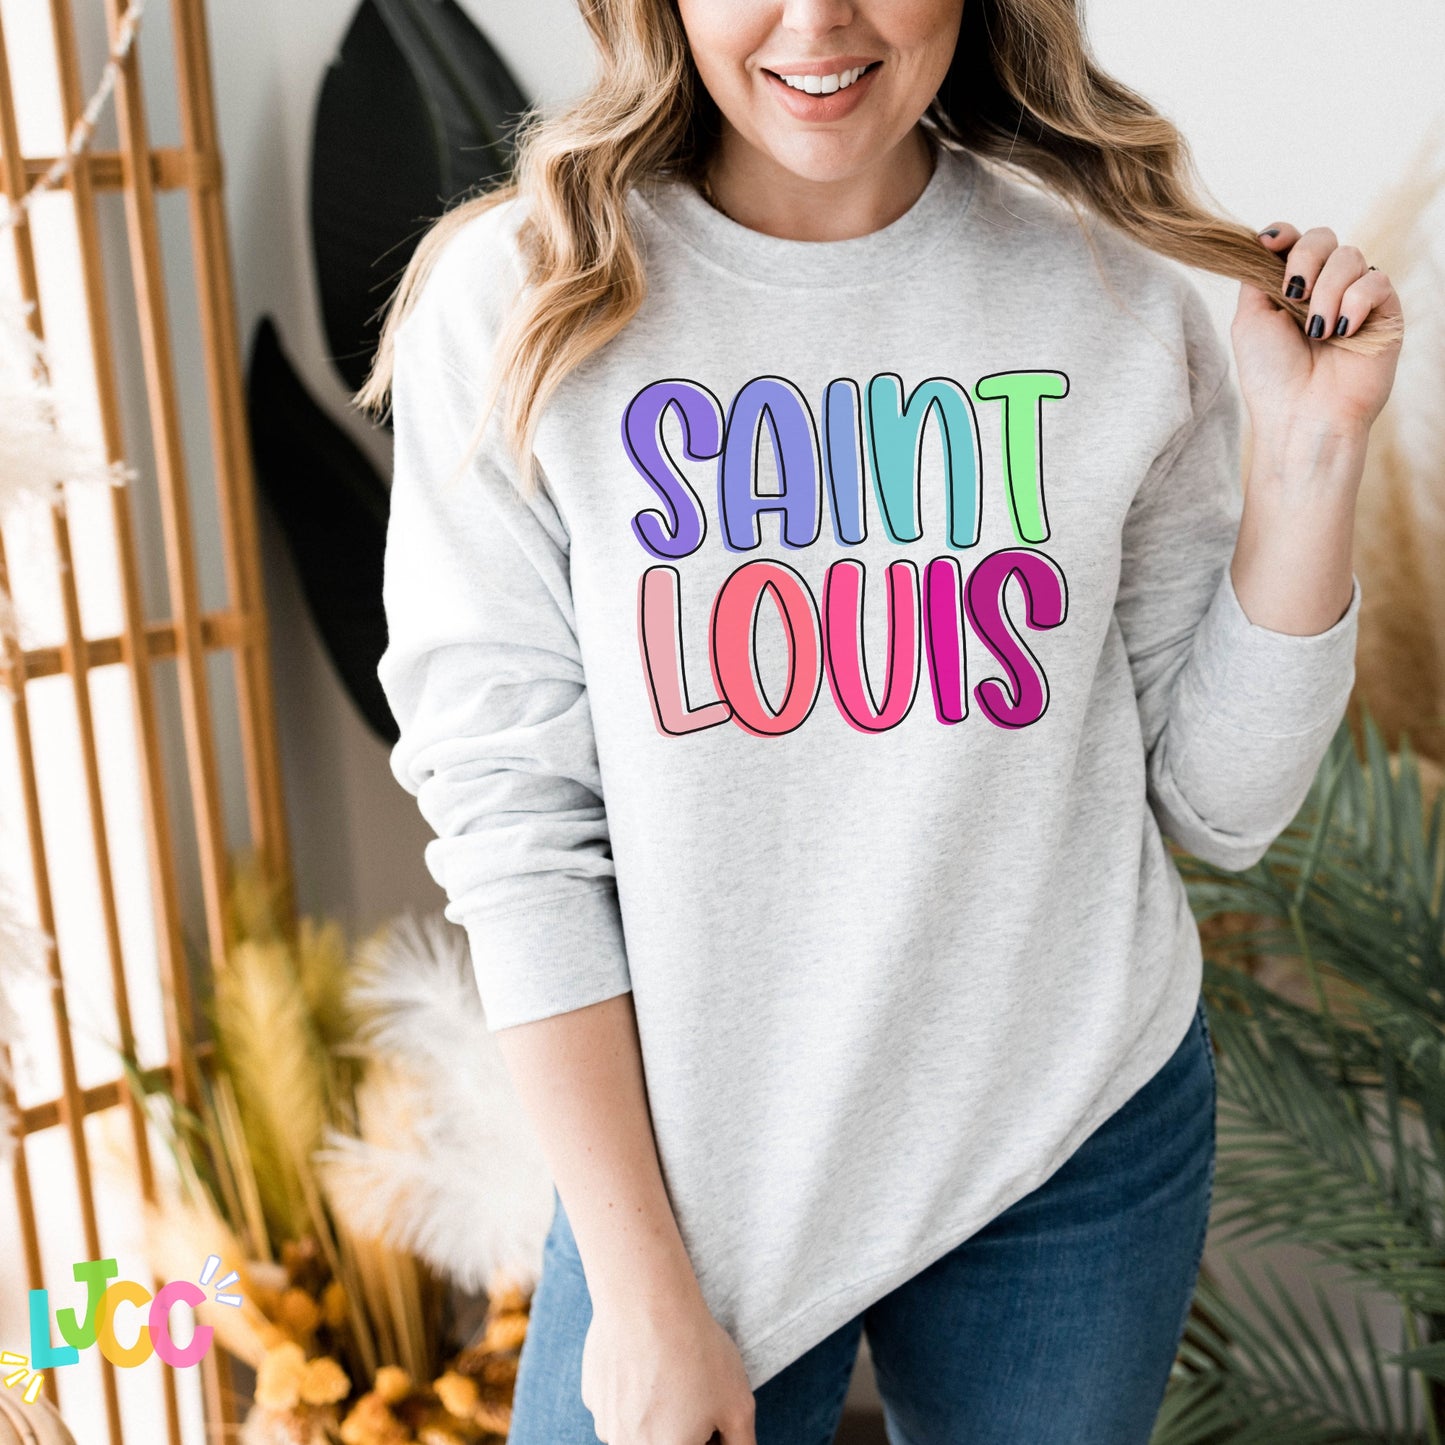 Saint Louis - Bright